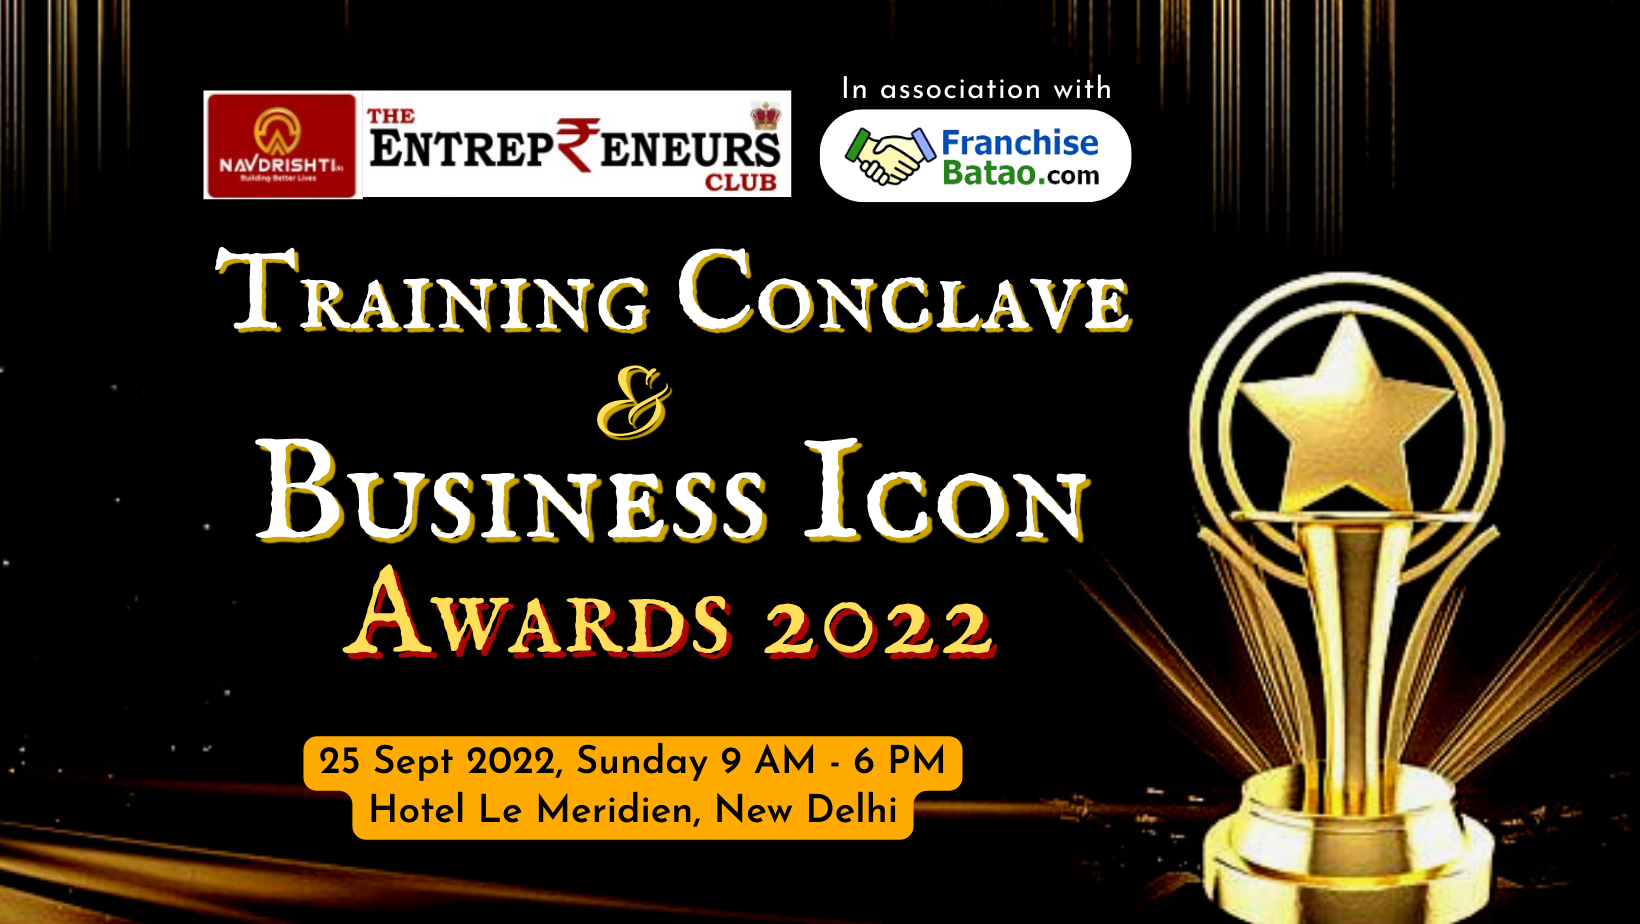 Franchise Batao Training  conclave and Business icon award 2022 in New Delhi, New Delhi, Delhi, India